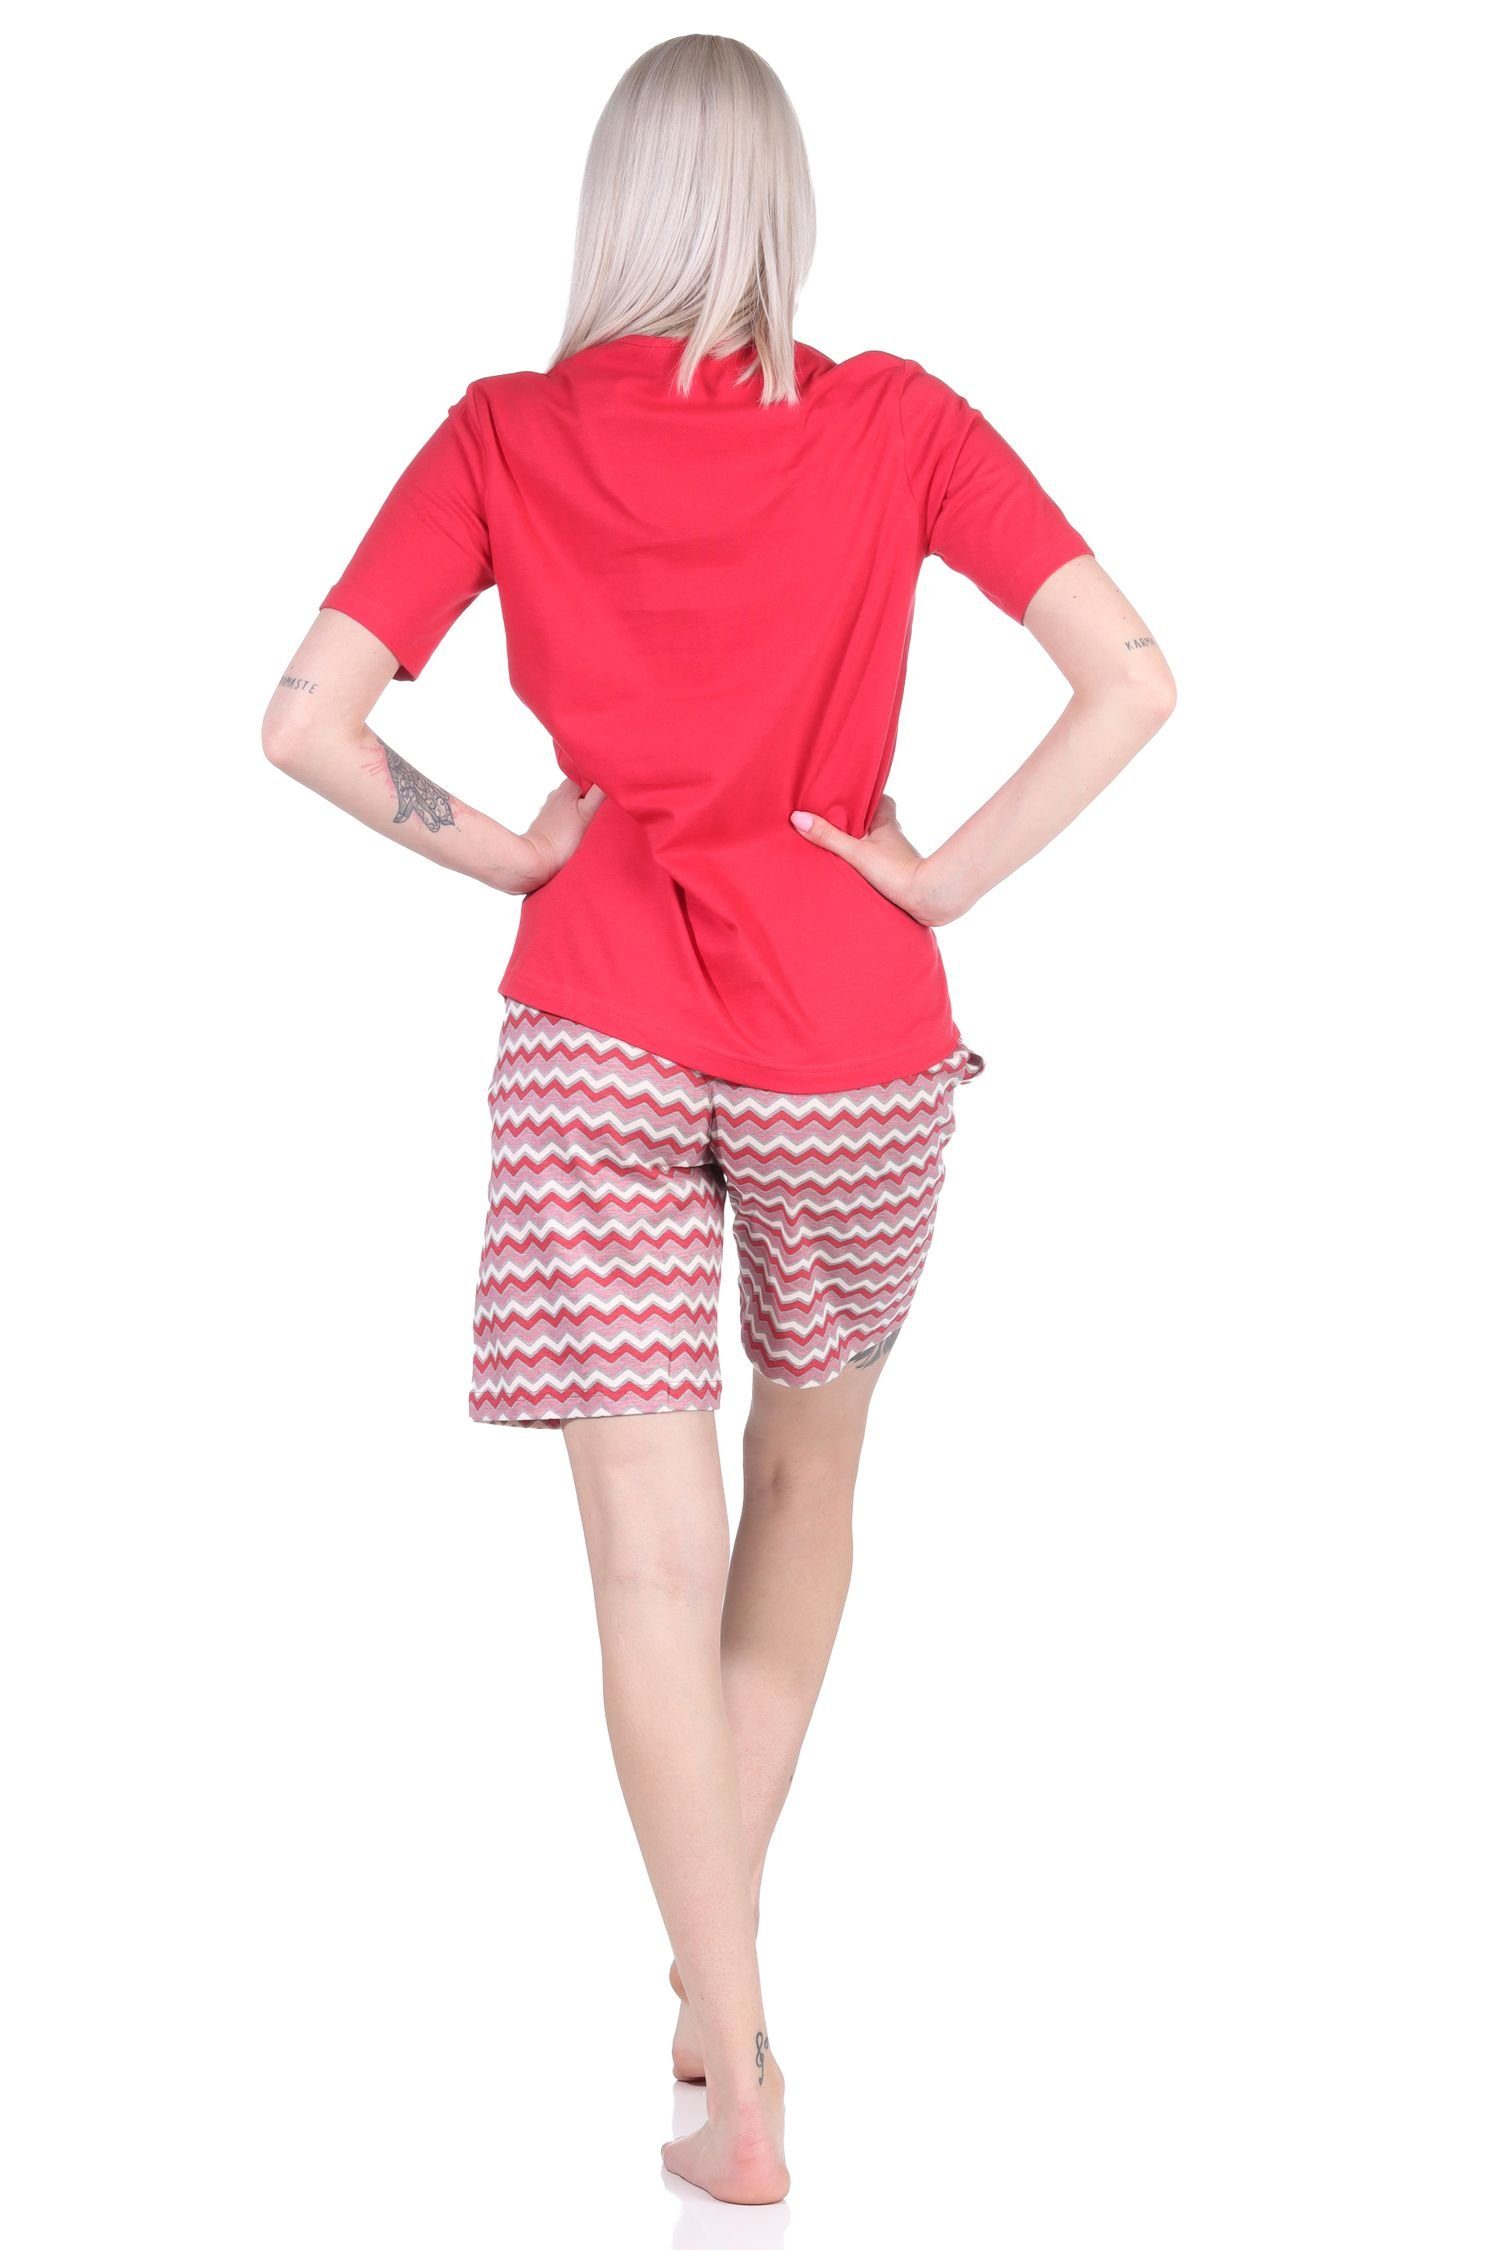 mit Farben strahlenden Pyjama kurz Normann Pyjama rot Damen in gemusterten Shorts Shorty